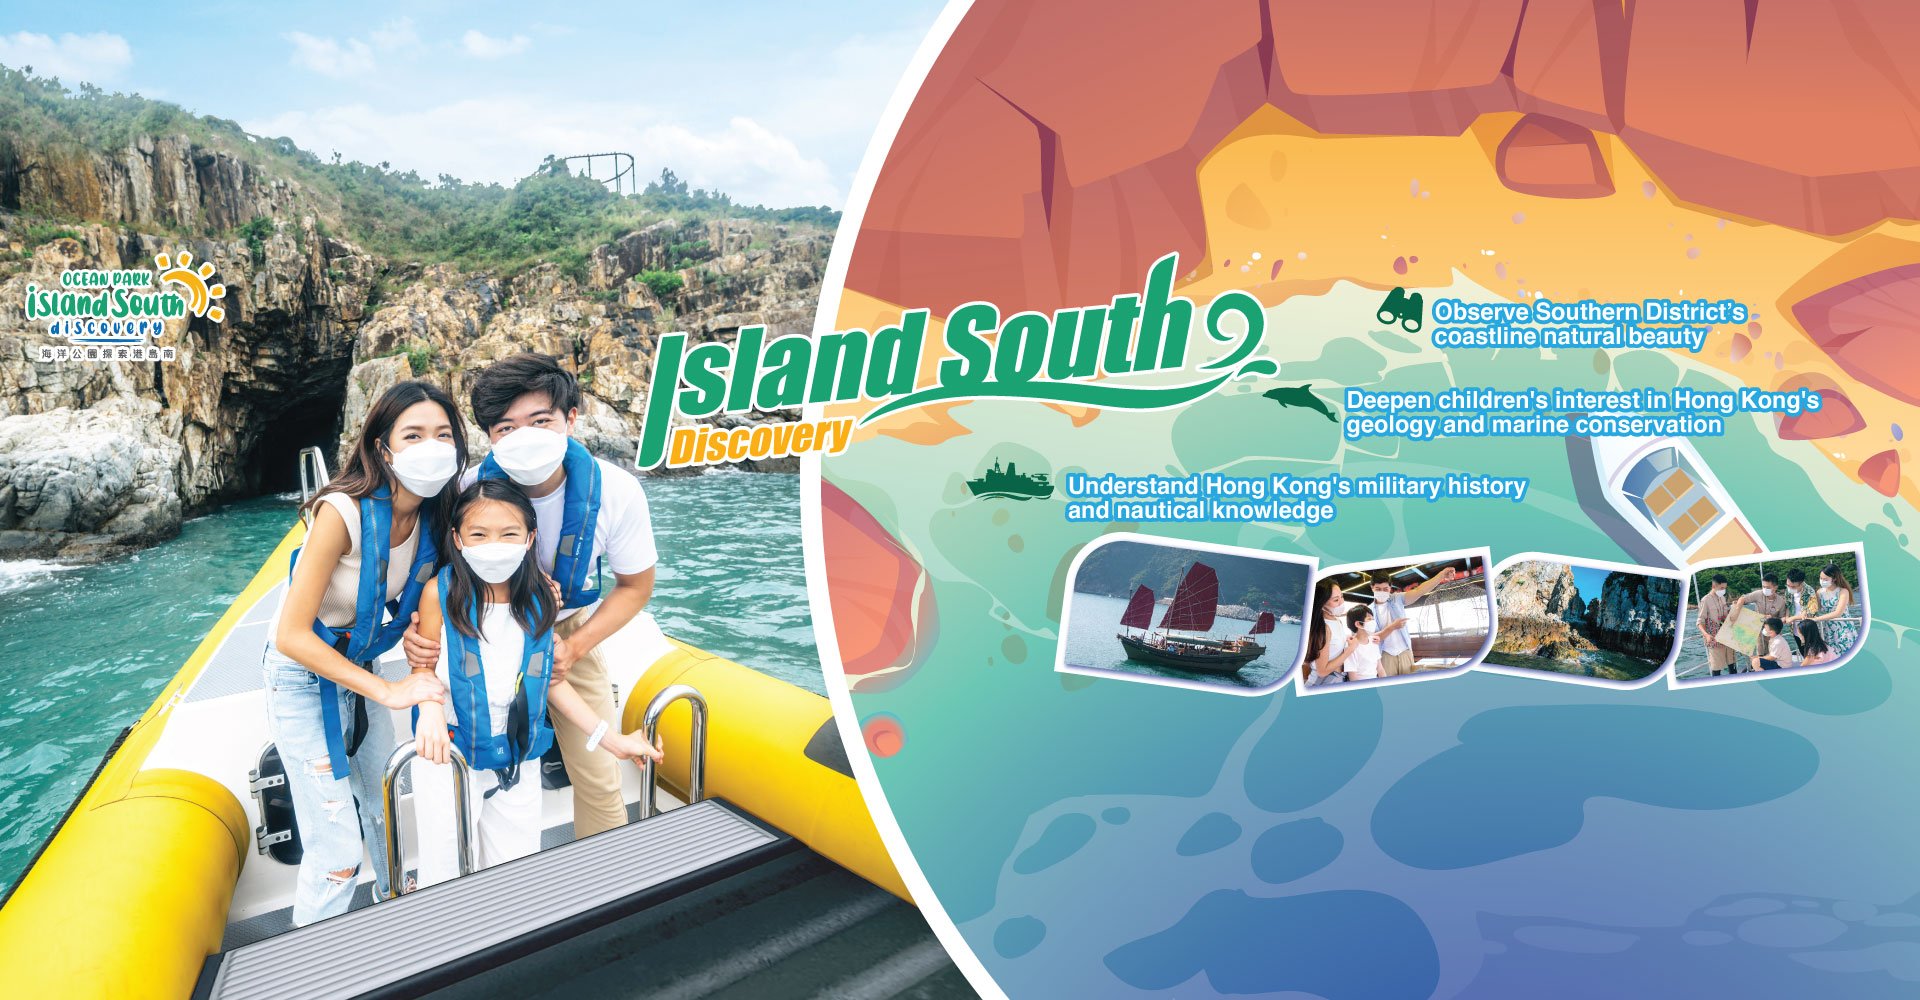 http://media.oceanpark.com.hk/files/s3fs-public/little-geologist-innerpage-desktop-banner-en_0.jpg